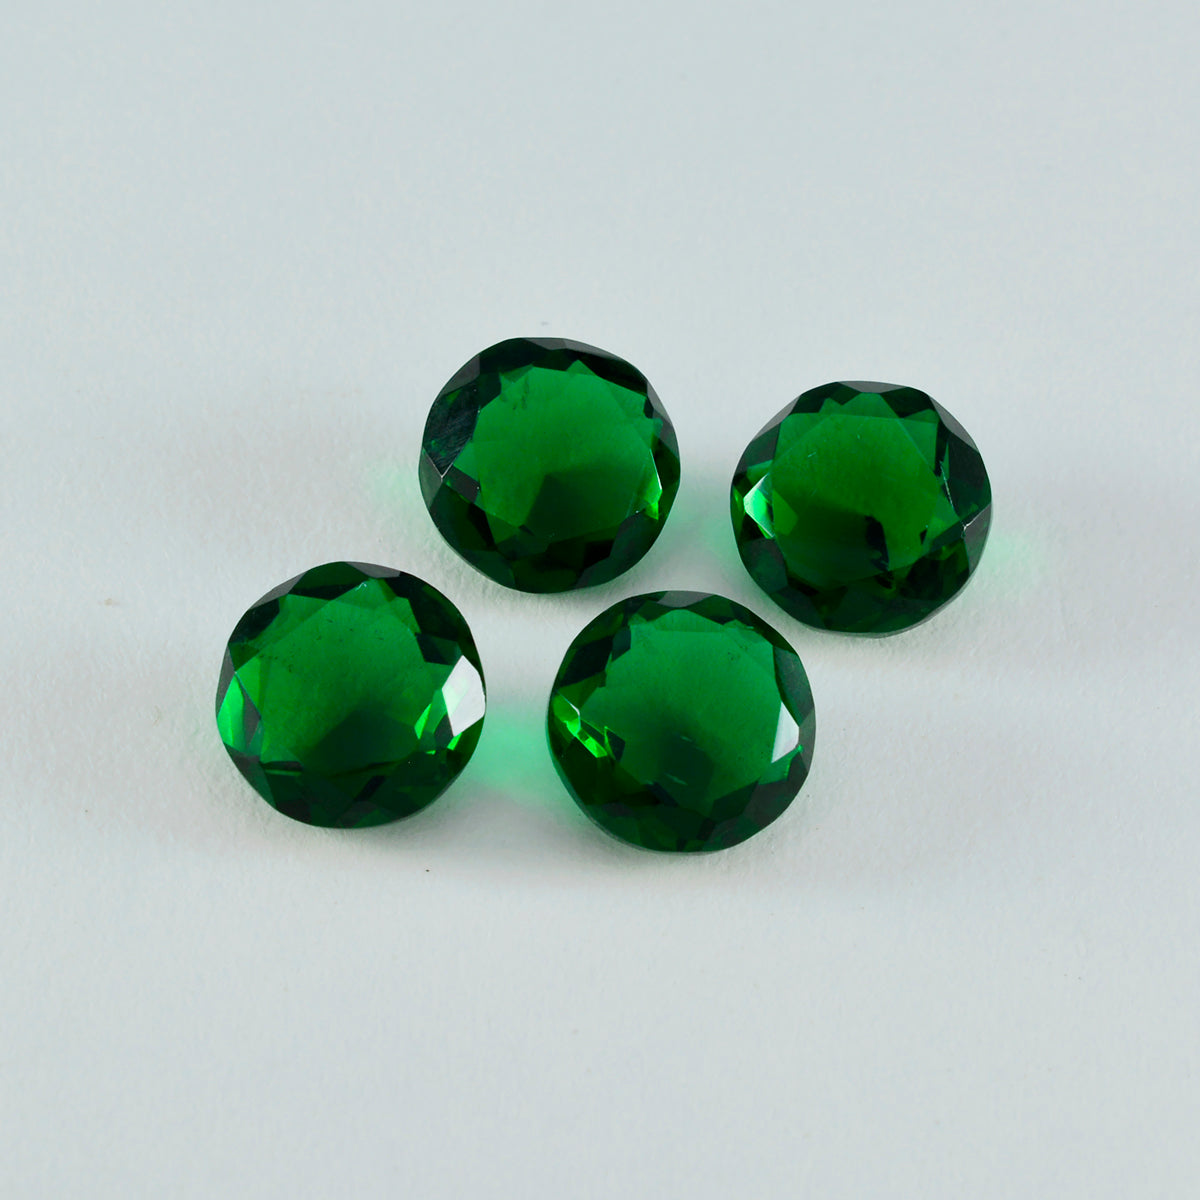 Riyogems 1PC Green Emerald CZ Faceted 11x11 mm Round Shape A1 Quality Loose Gemstone